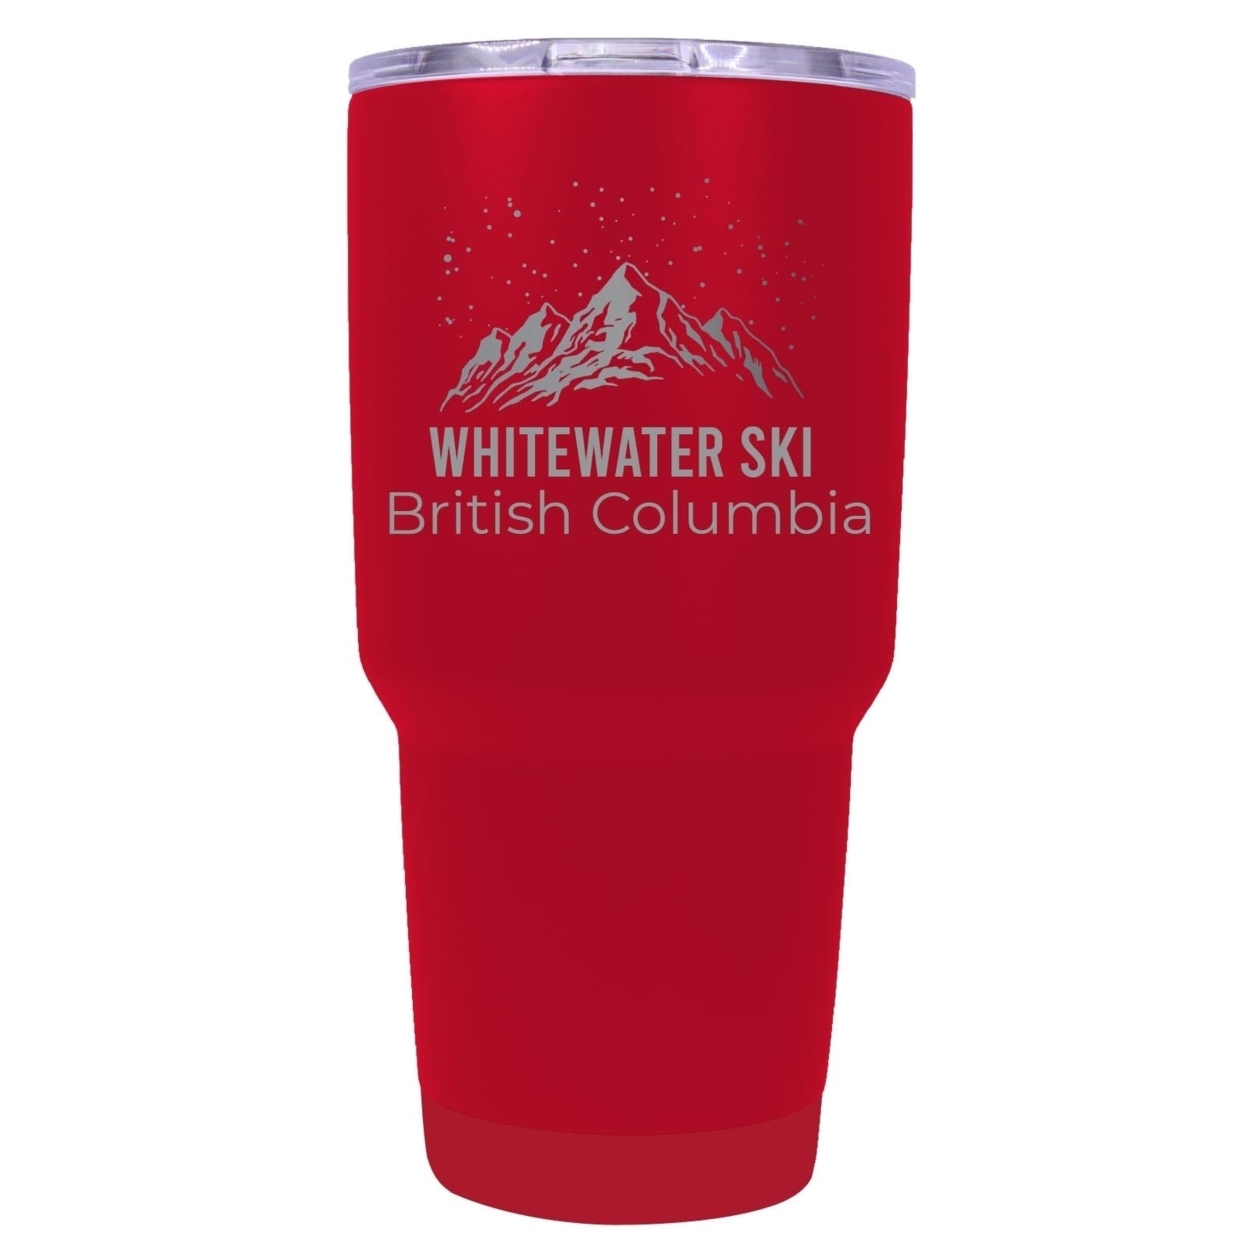 Whitewater Ski British Columbia Ski Snowboard Winter Souvenir Laser Engraved 24 Oz Insulated Stainless Steel Tumbler - Red